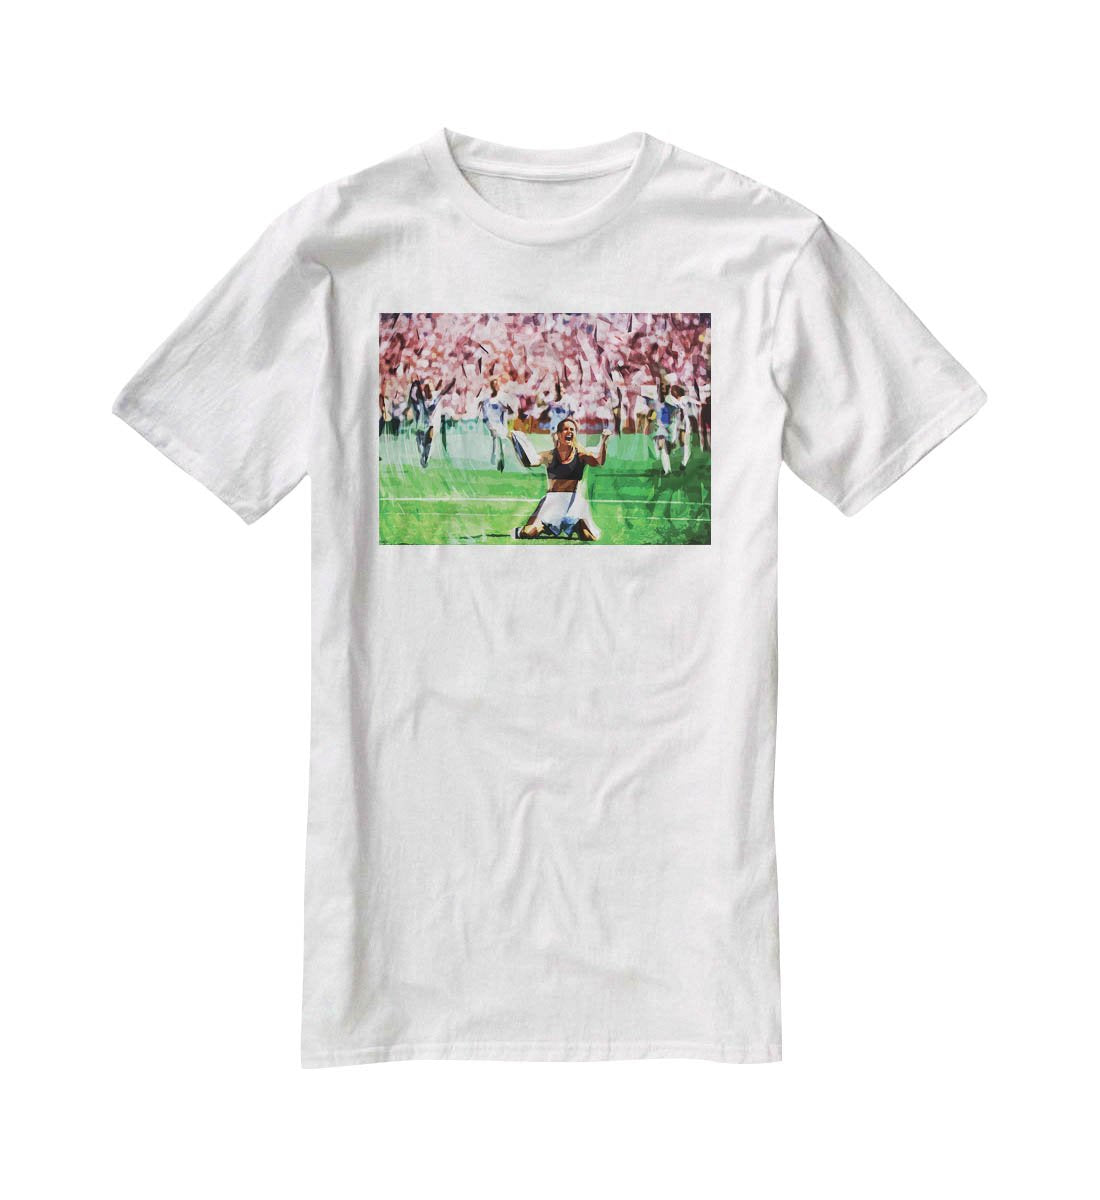 Brandi Chastain Celebrates USA Soccer 1999 T-Shirt - Canvas Art Rocks - 5